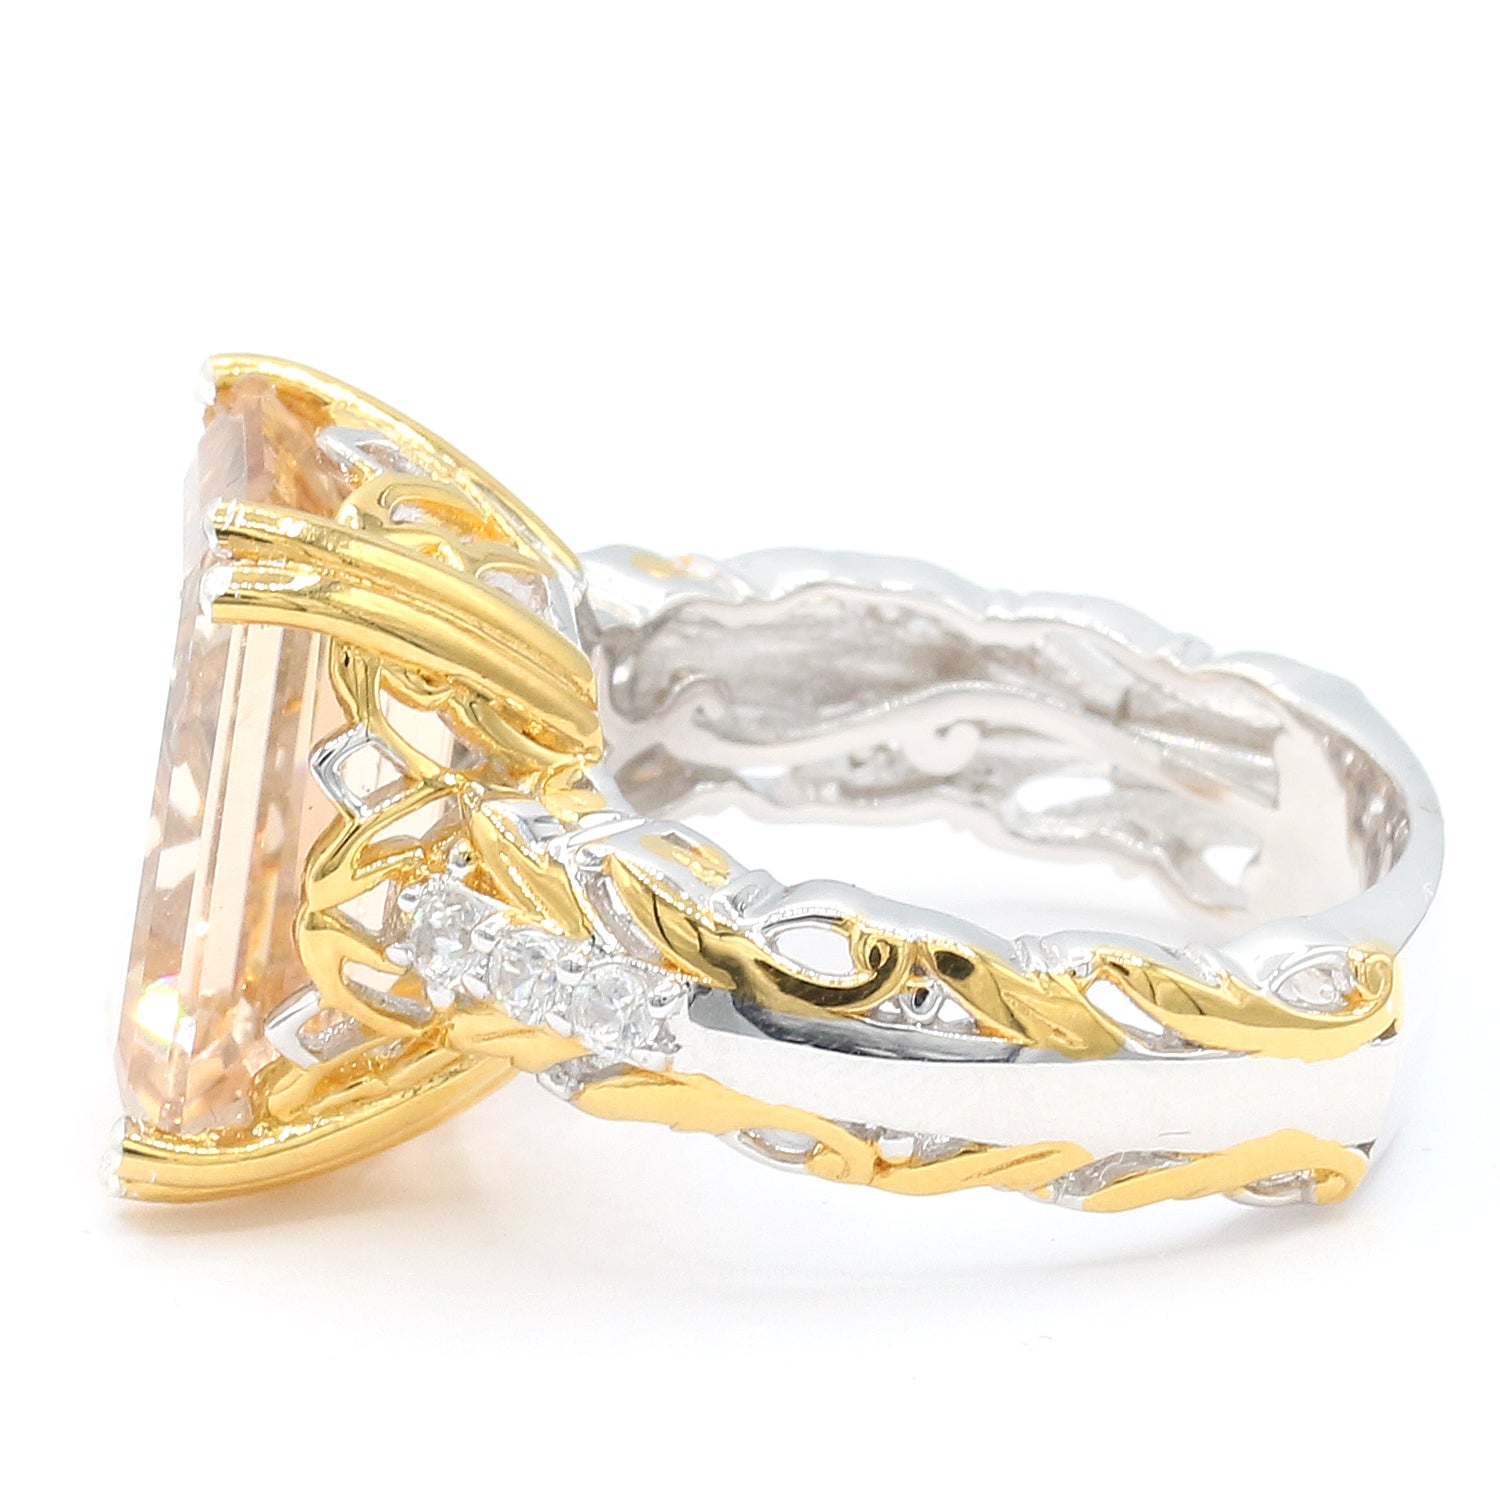 Limited Edition Gems en Vogue 8.82ctw Peach Morganite & White Zircon Ring